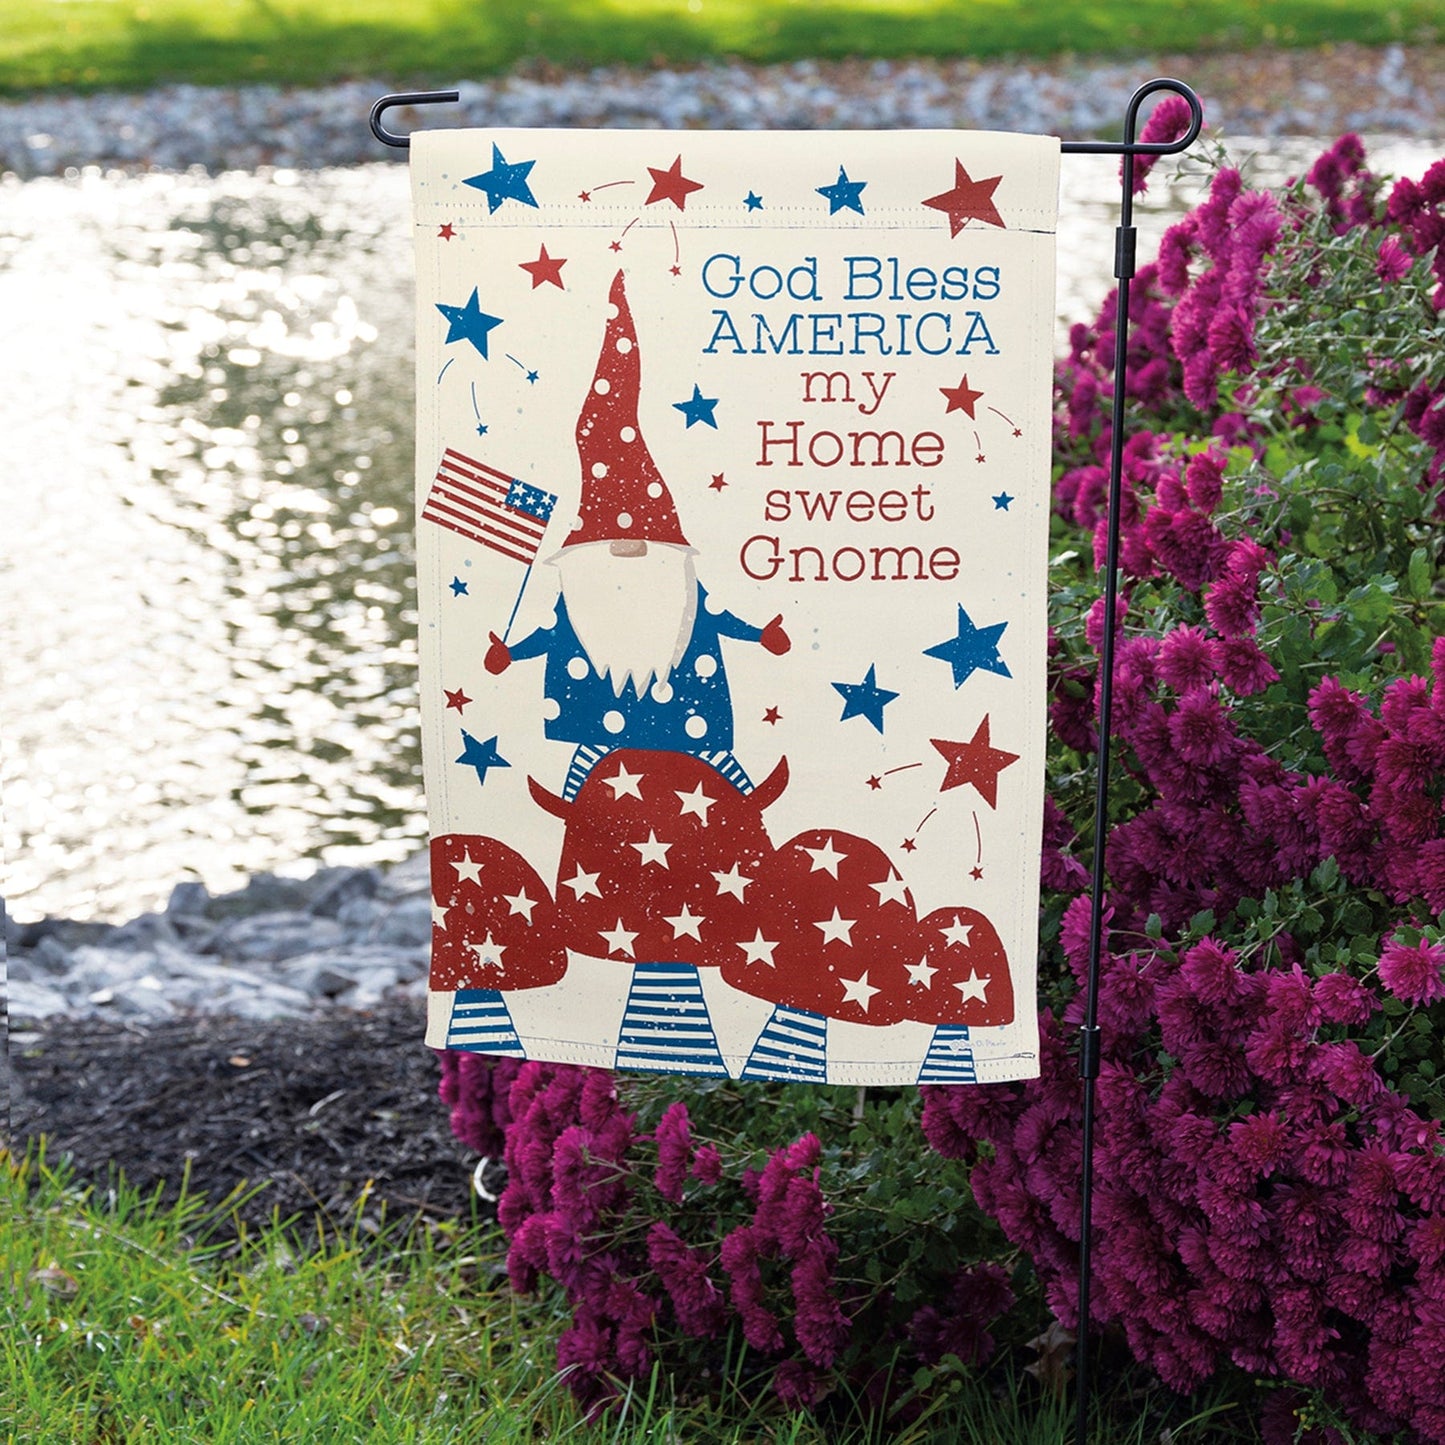 Flags & Windsocks Garden Flag - America My Home Sweet Gnome PBK-109350